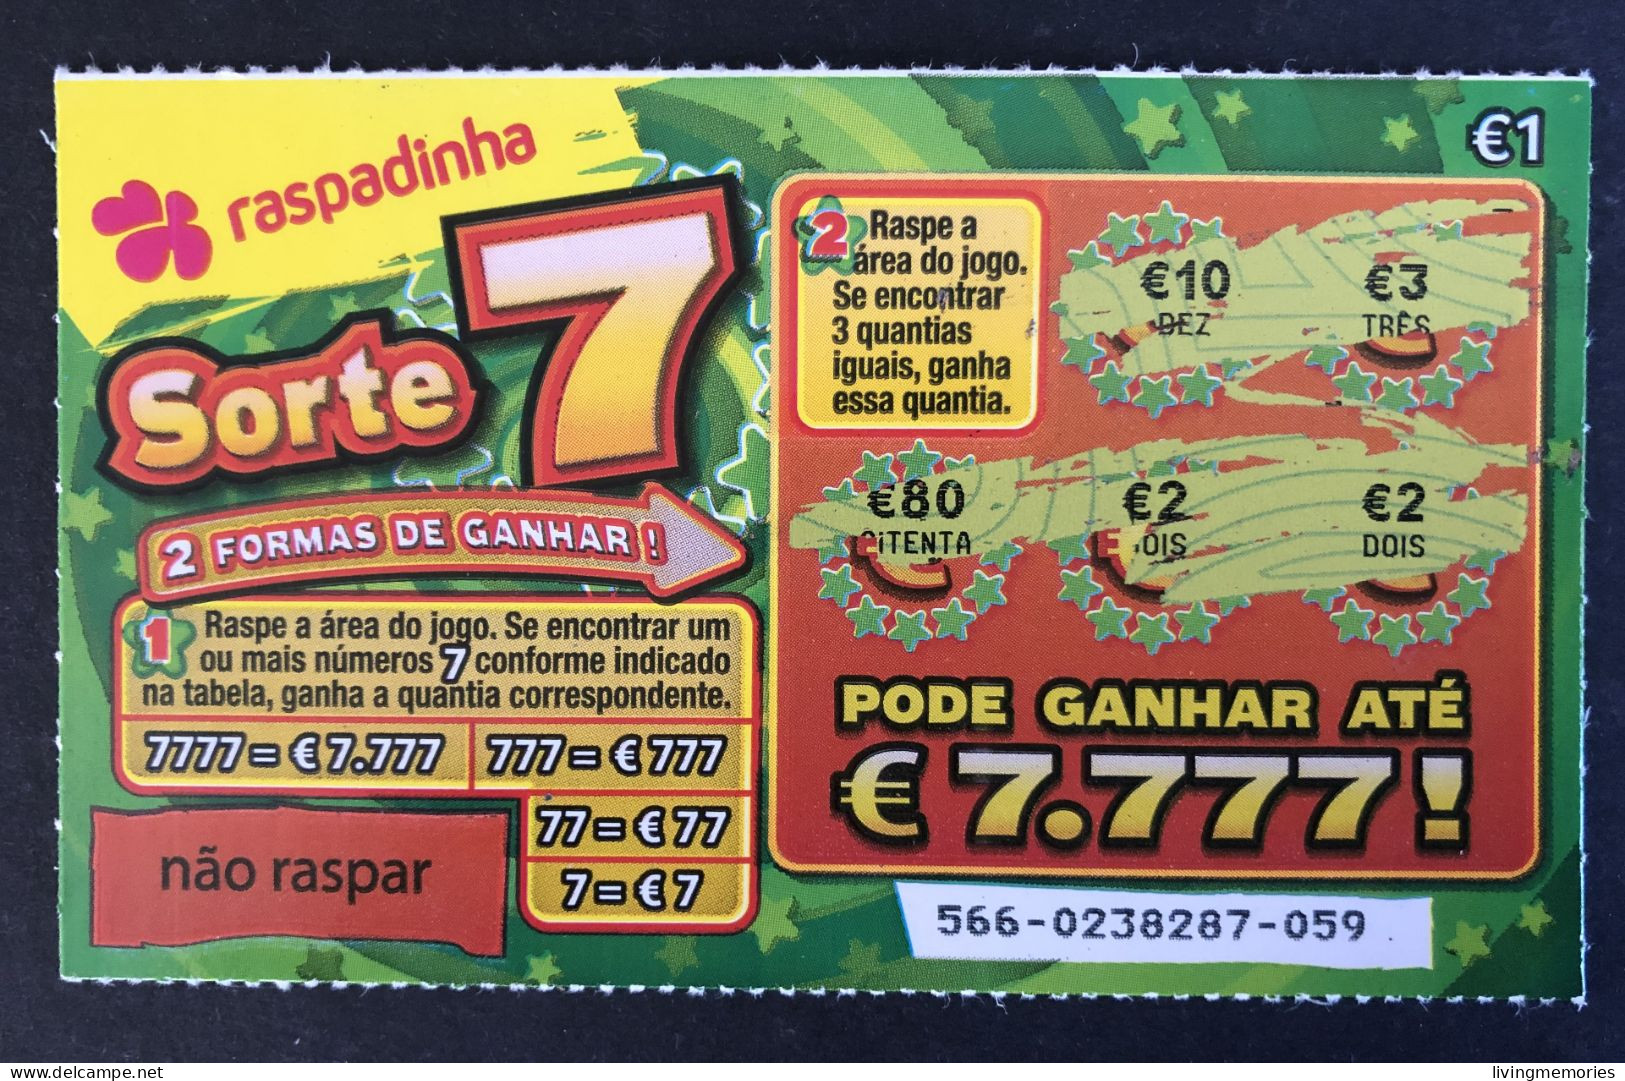 116 X, Lottery Tickets, Portugal, « Raspadinha », « Instant Lottery », « Raspadinha Sorte 7 » # 566 - Billets De Loterie